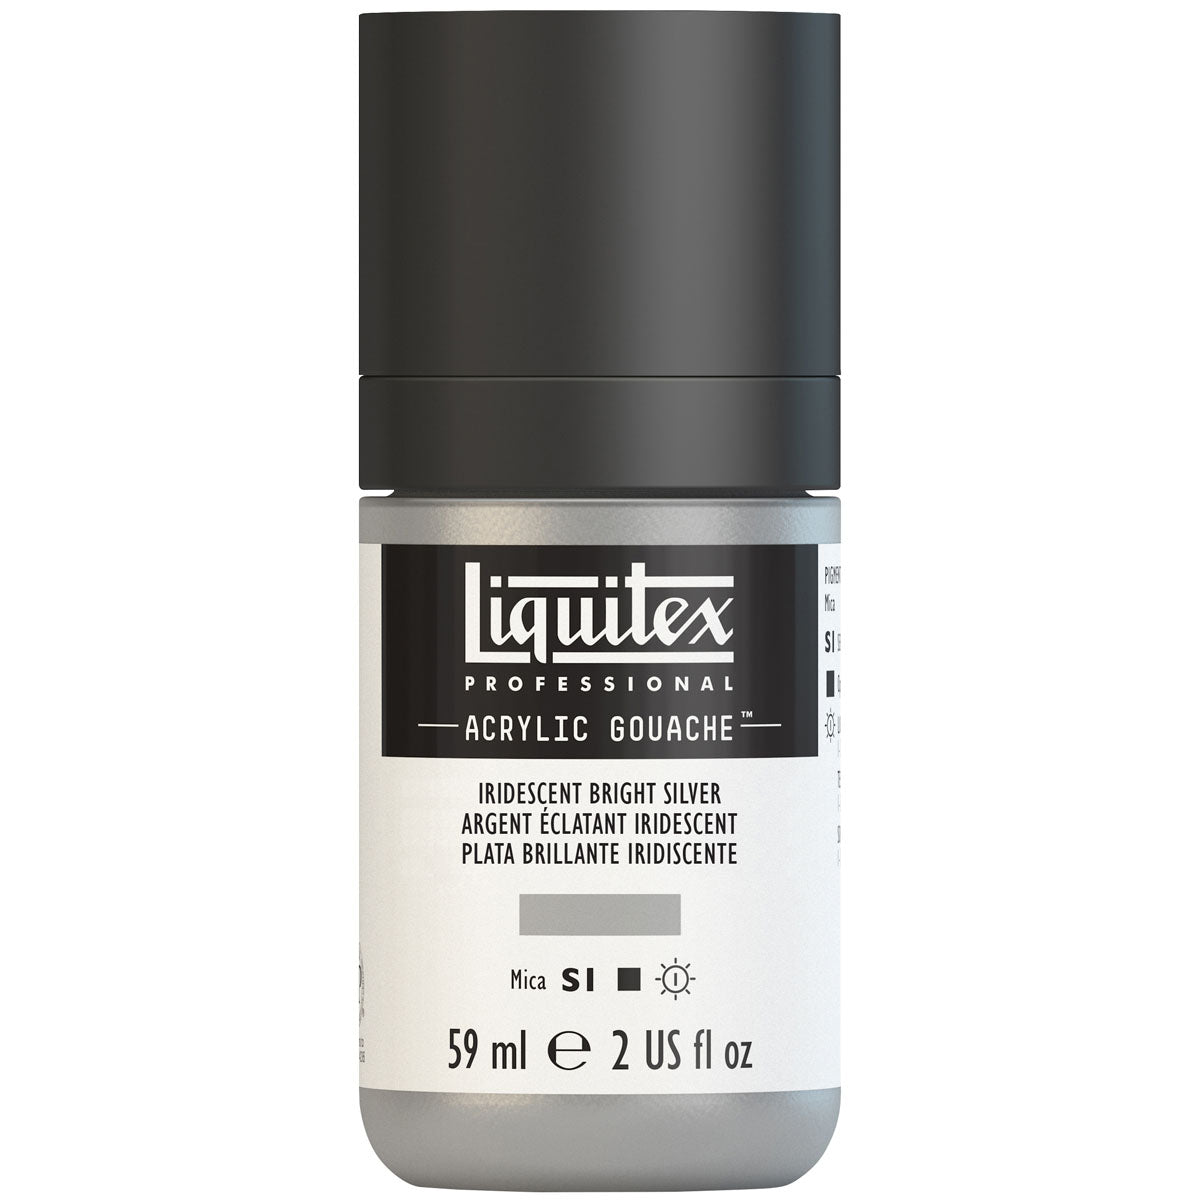 Liquitex - Acrylic Gouache 59ml S1 - Iridescent Bright Silver